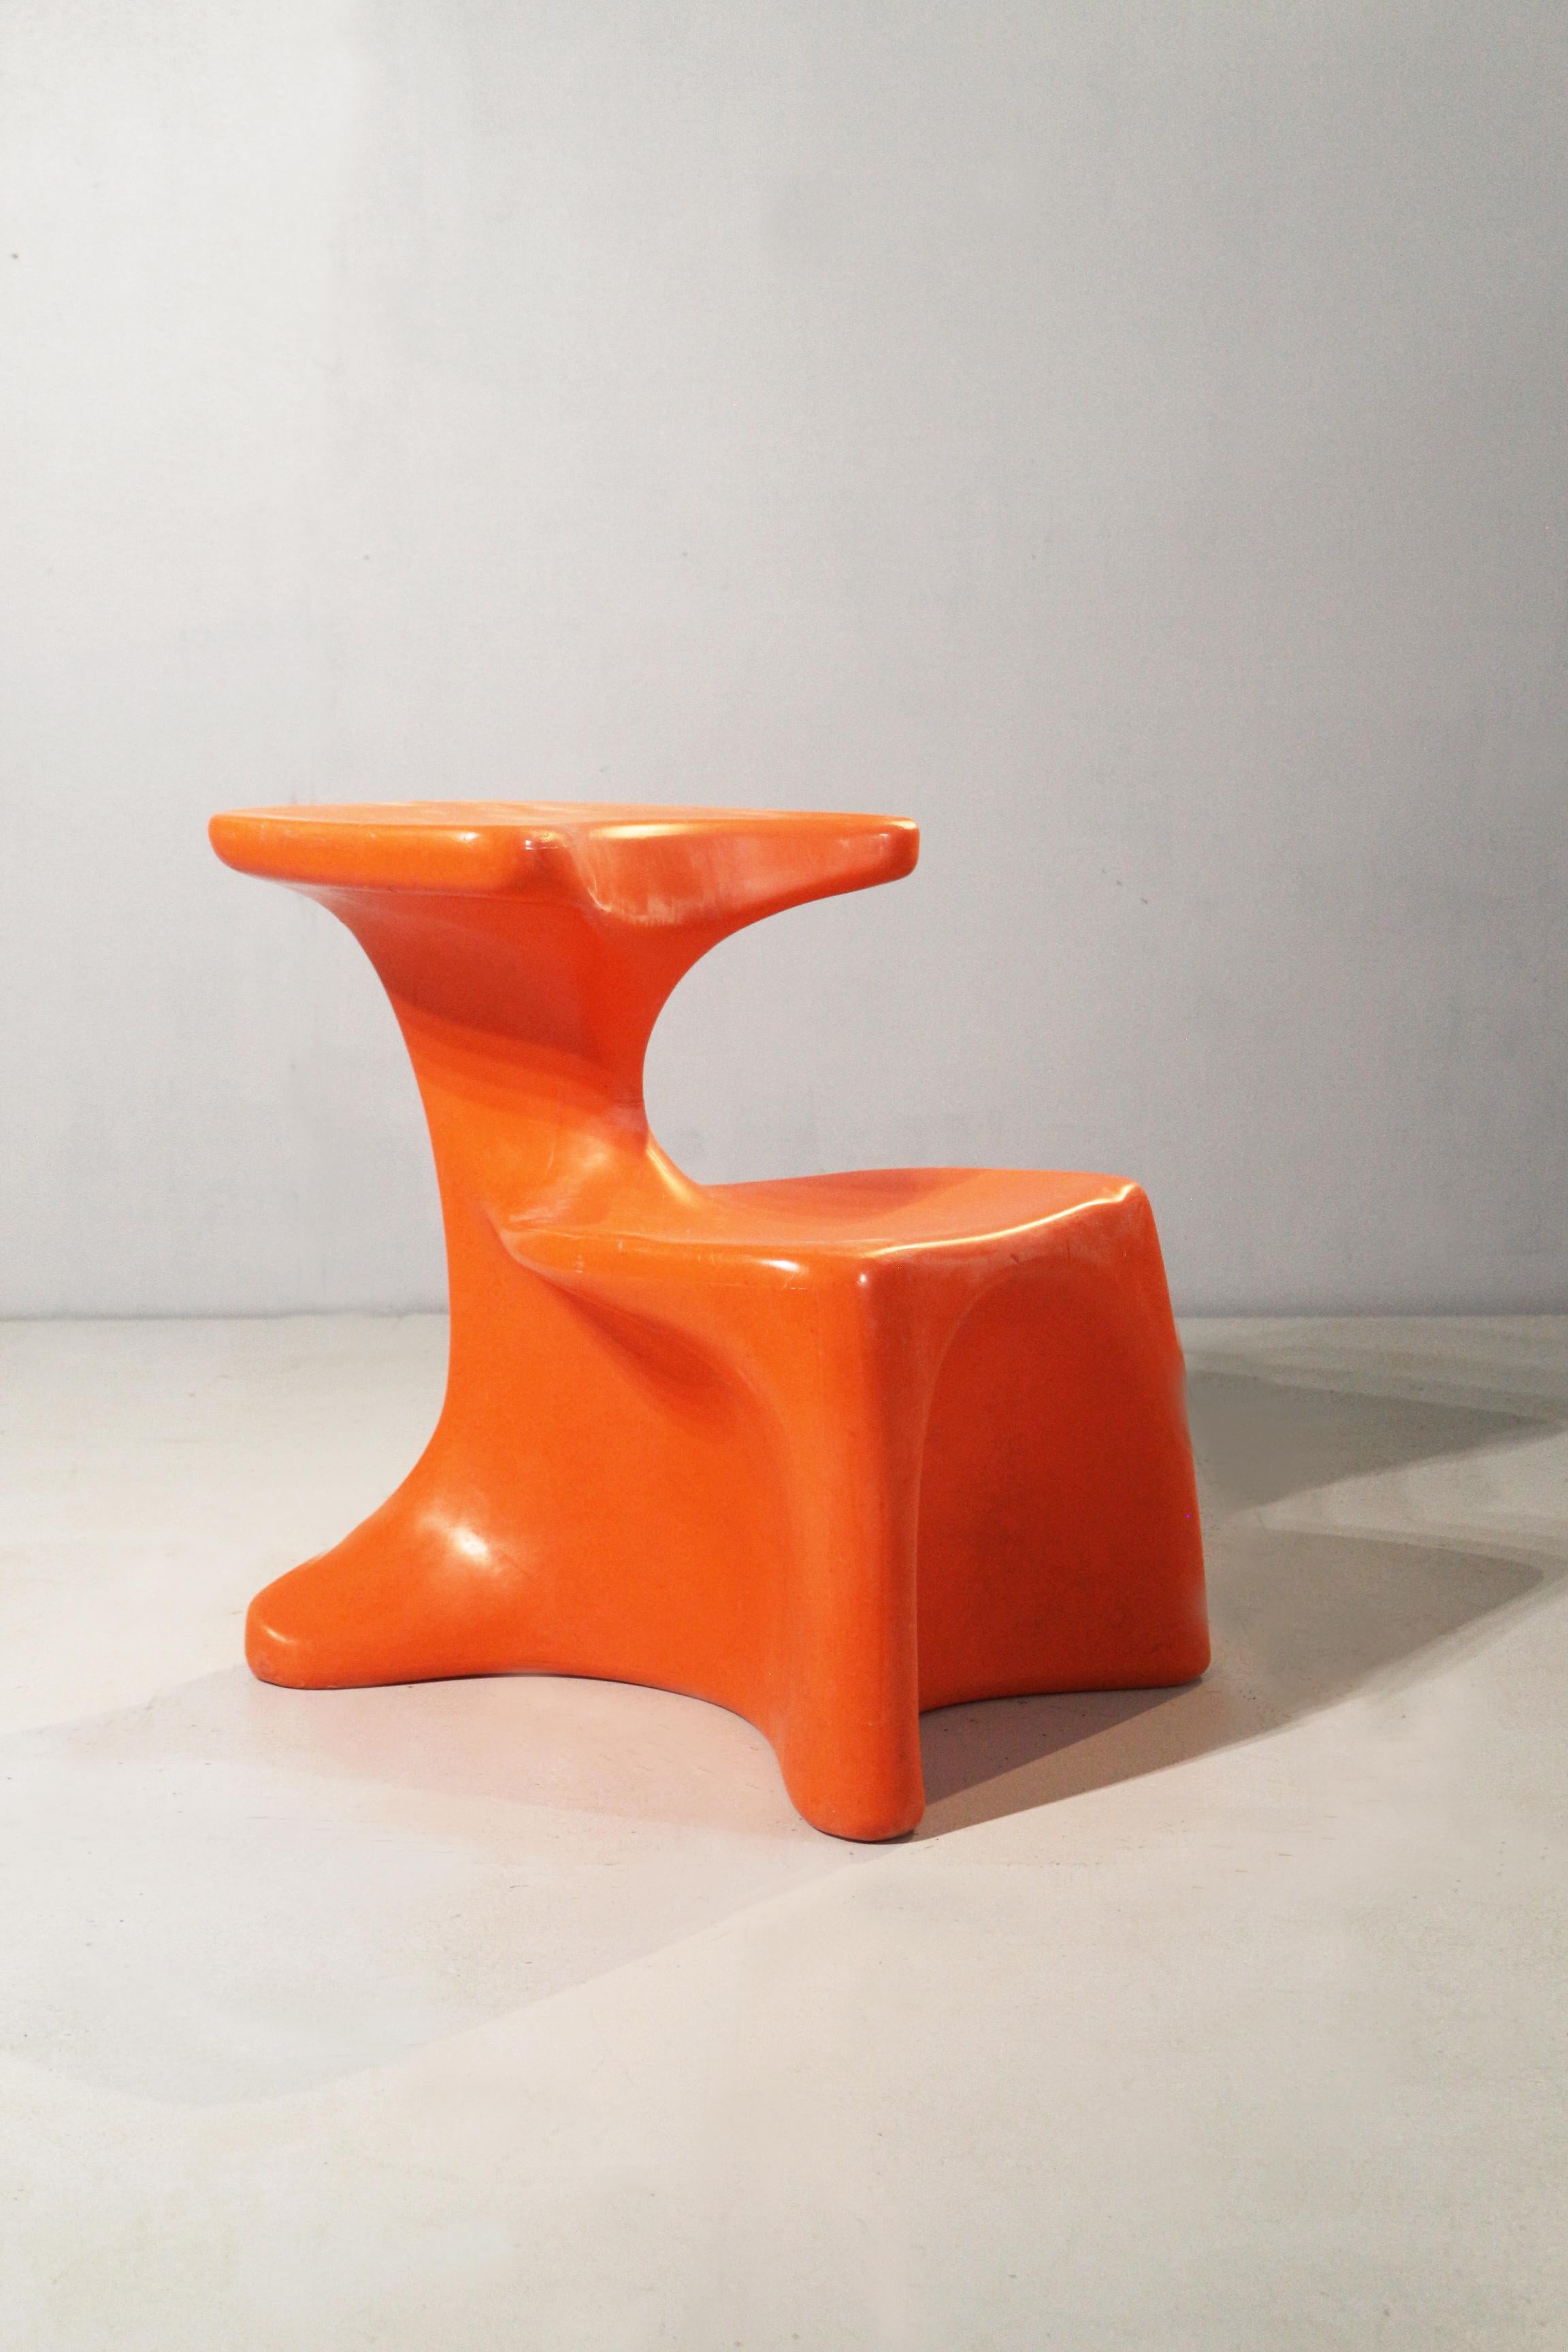 Space Age Luigi Colani 1971 chair  For Sale